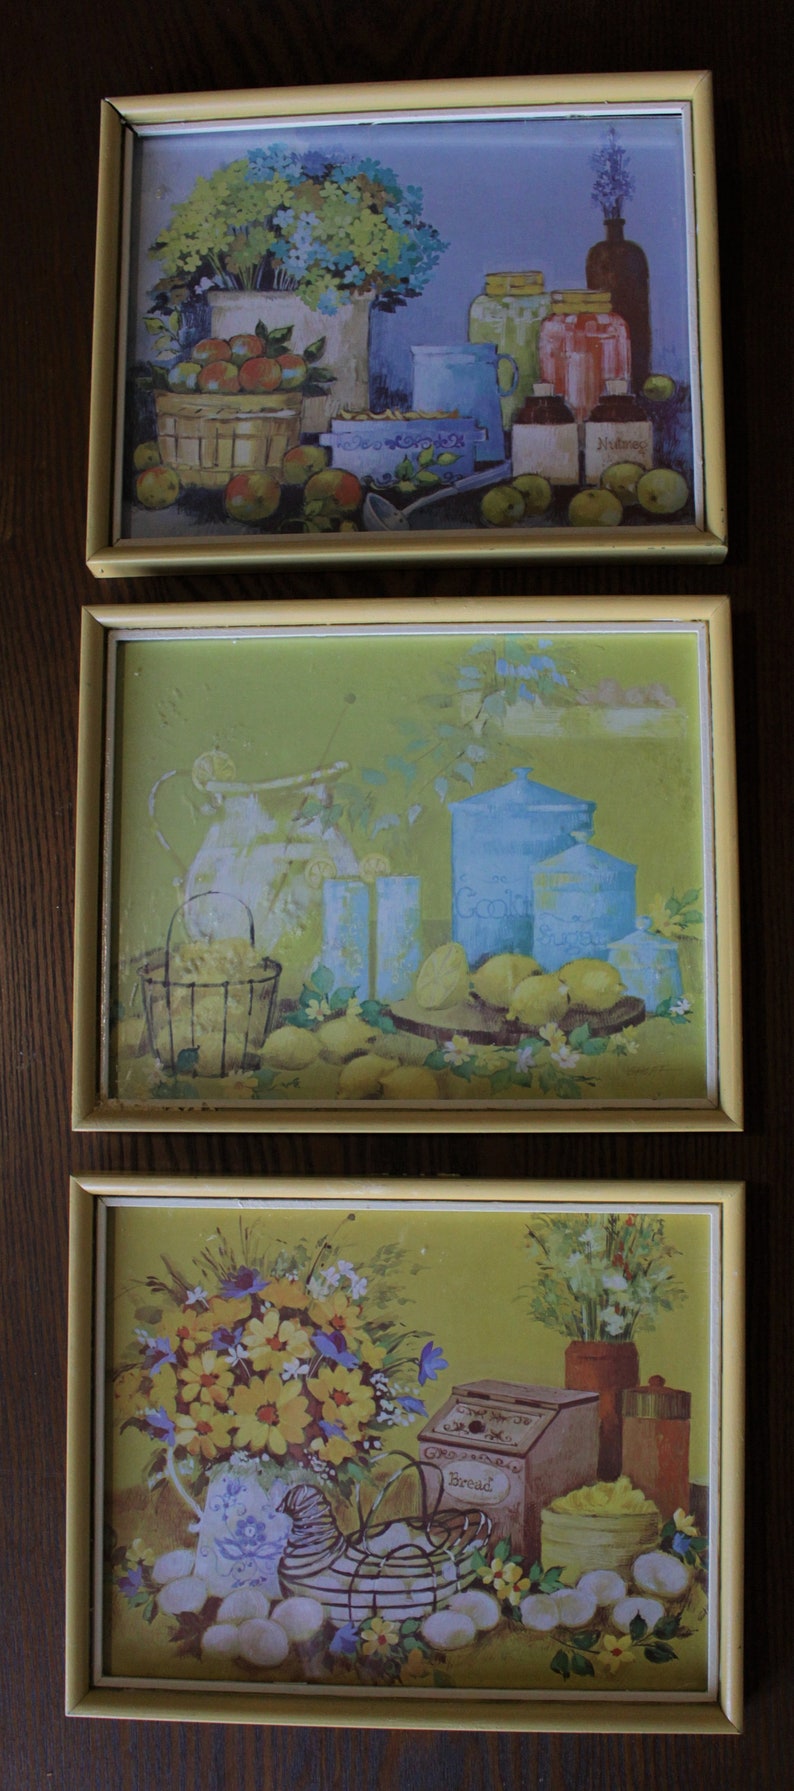 Set of 3 Vintage 1977 Calendar Prints in Yellow Frame image 0